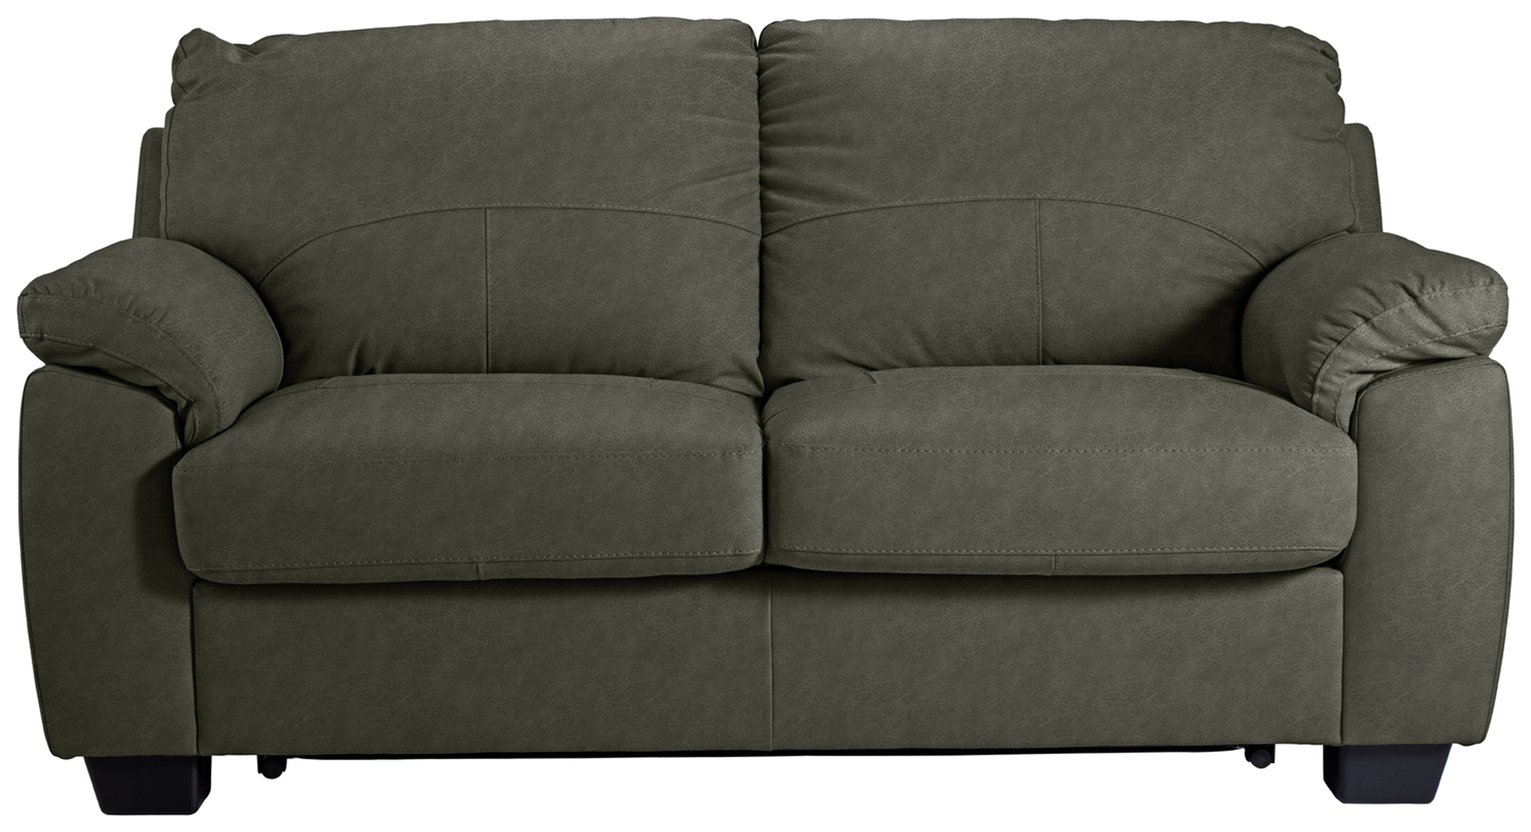 Argos Home Logan Bonded Leather Sofa Bed - Mottled Grey